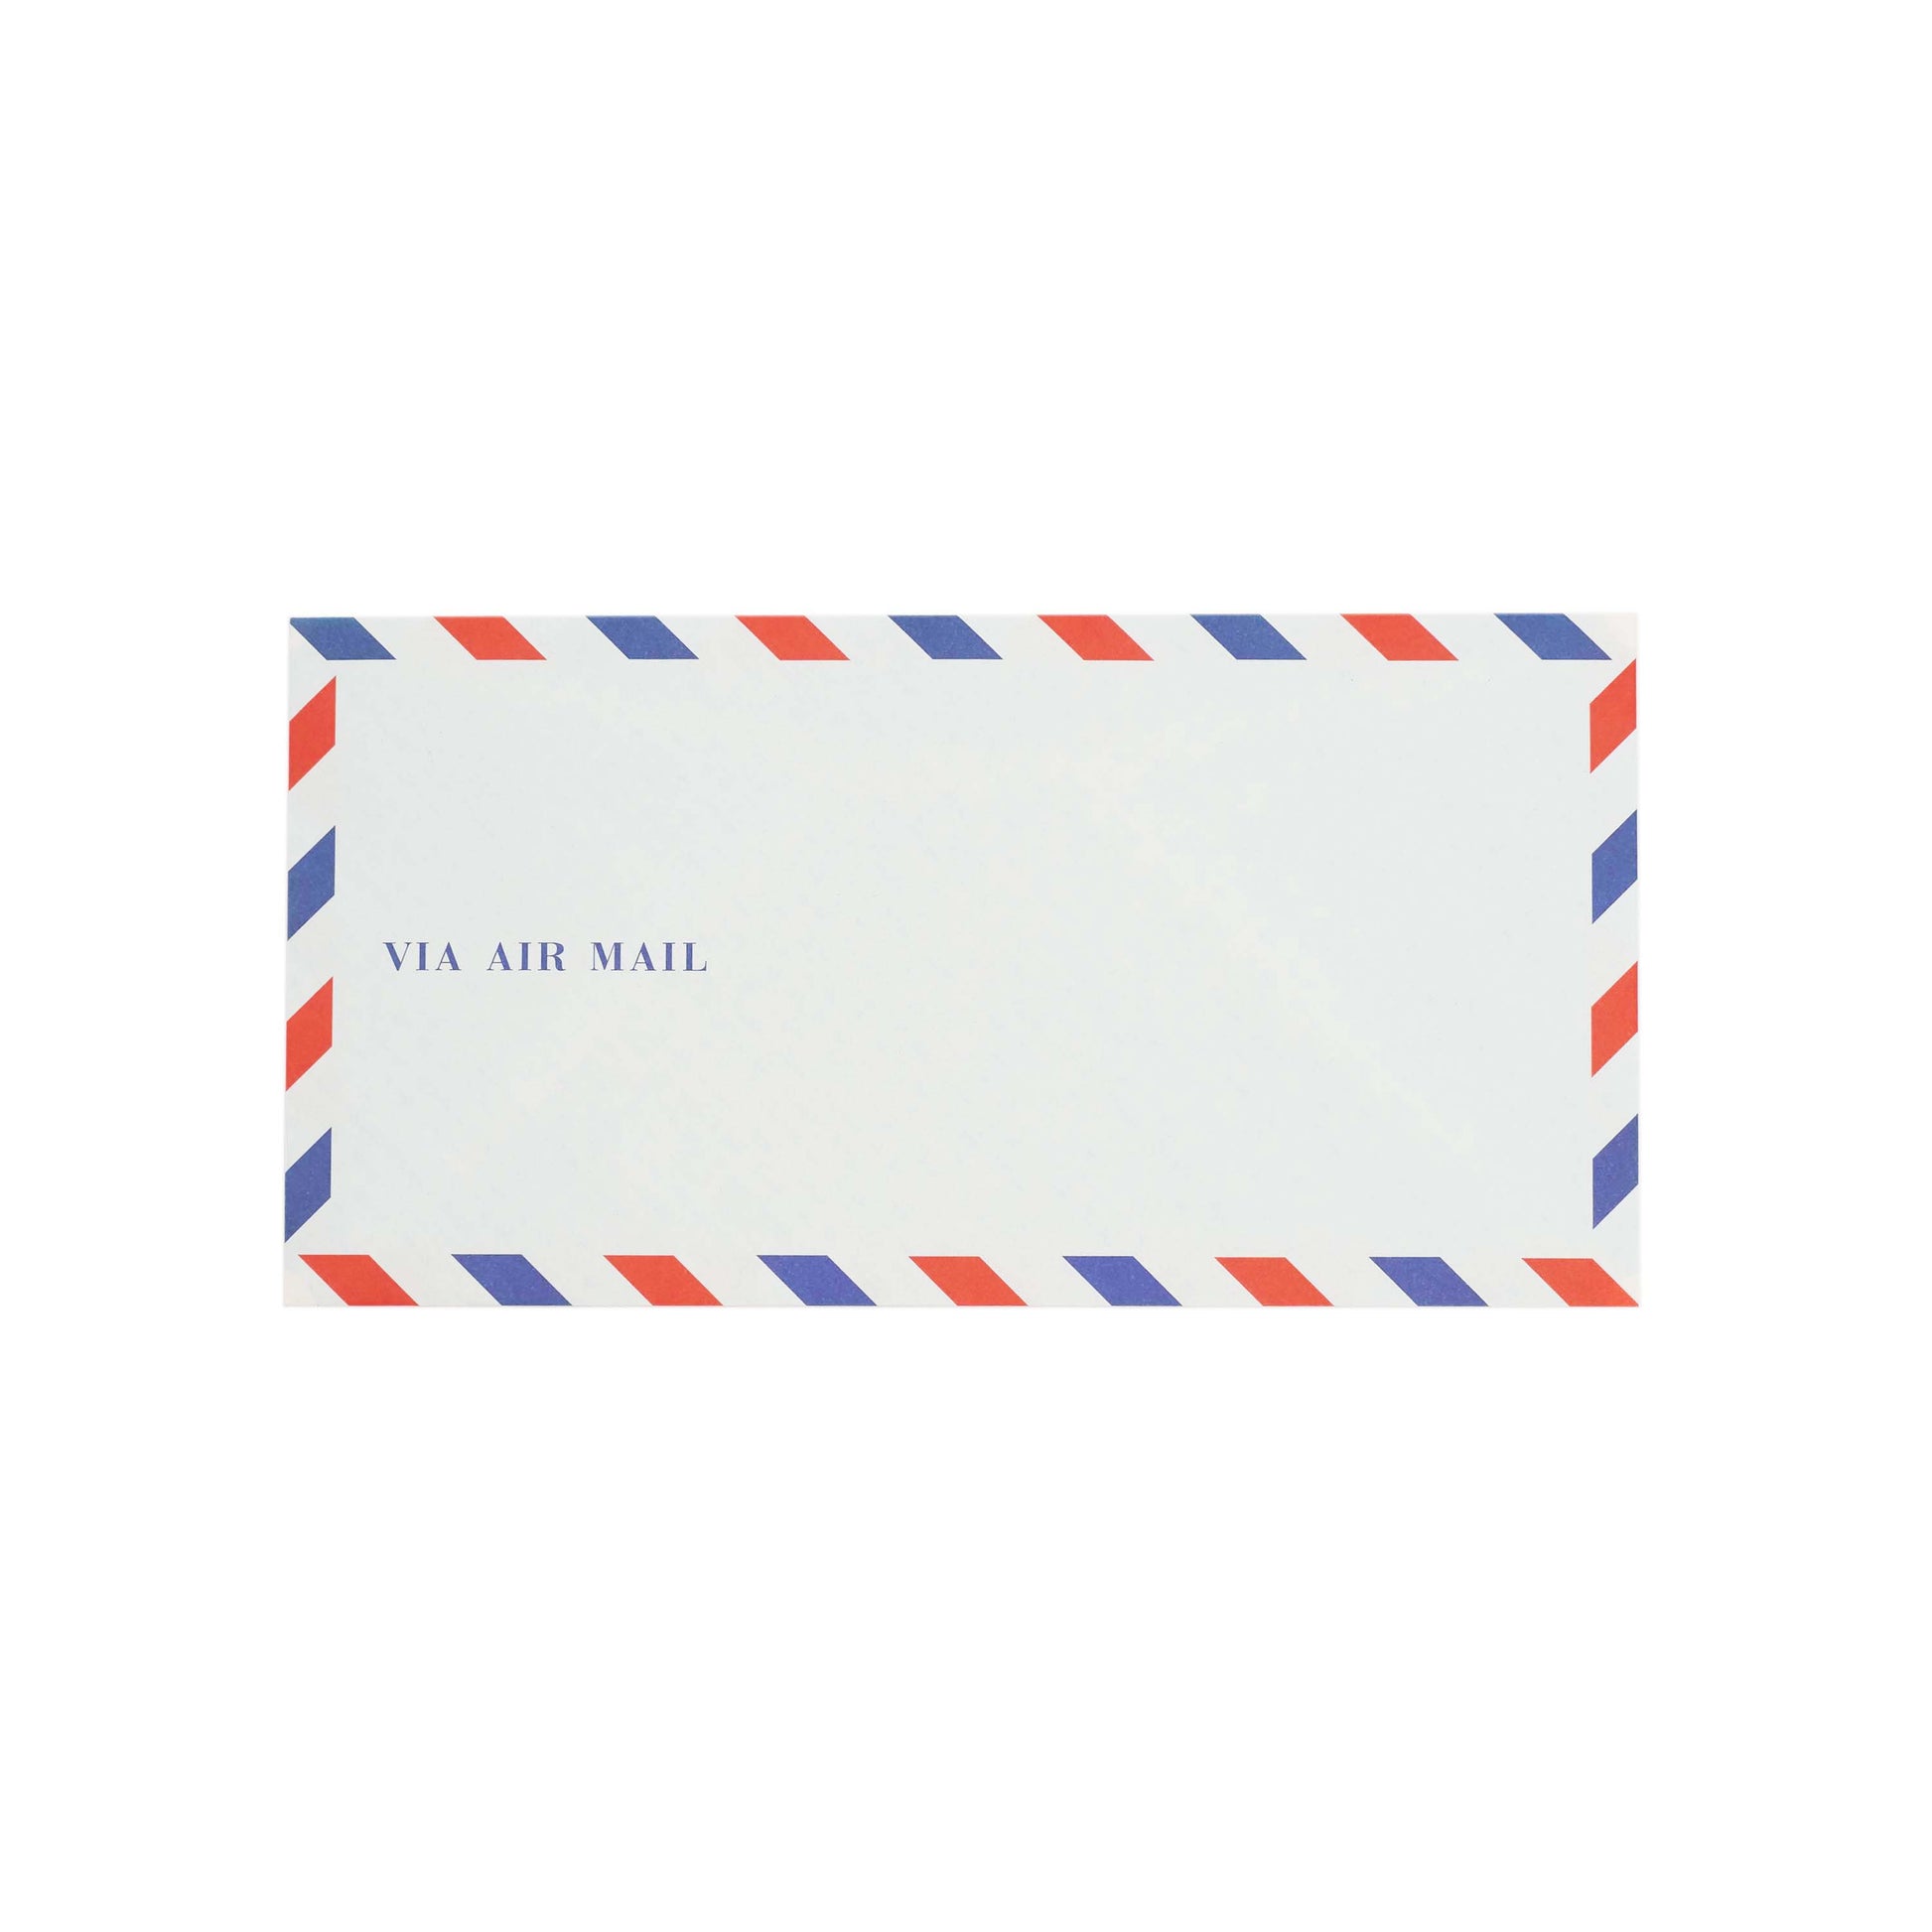 Life Airmail envelopes "via air mail" E26. Red white and blue envelopes  Edit alt text